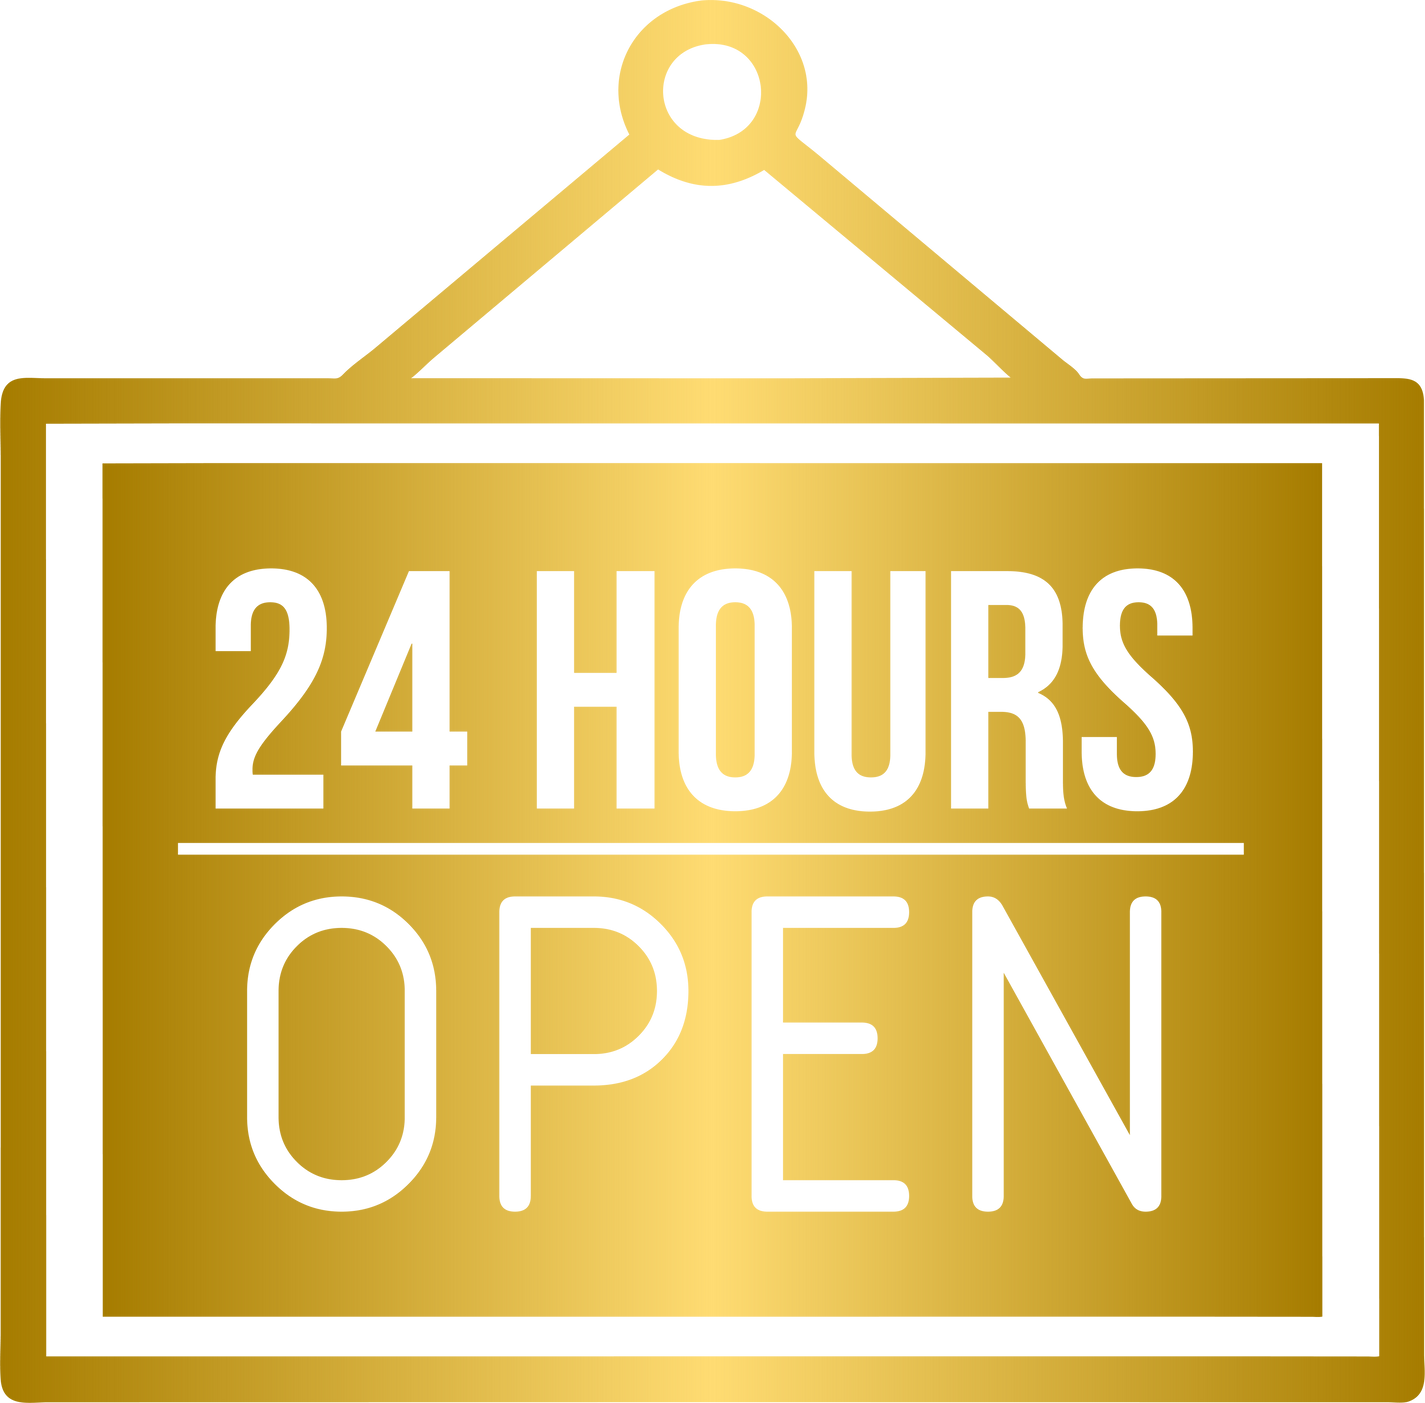 Golden 24 hours service, 24/7 service